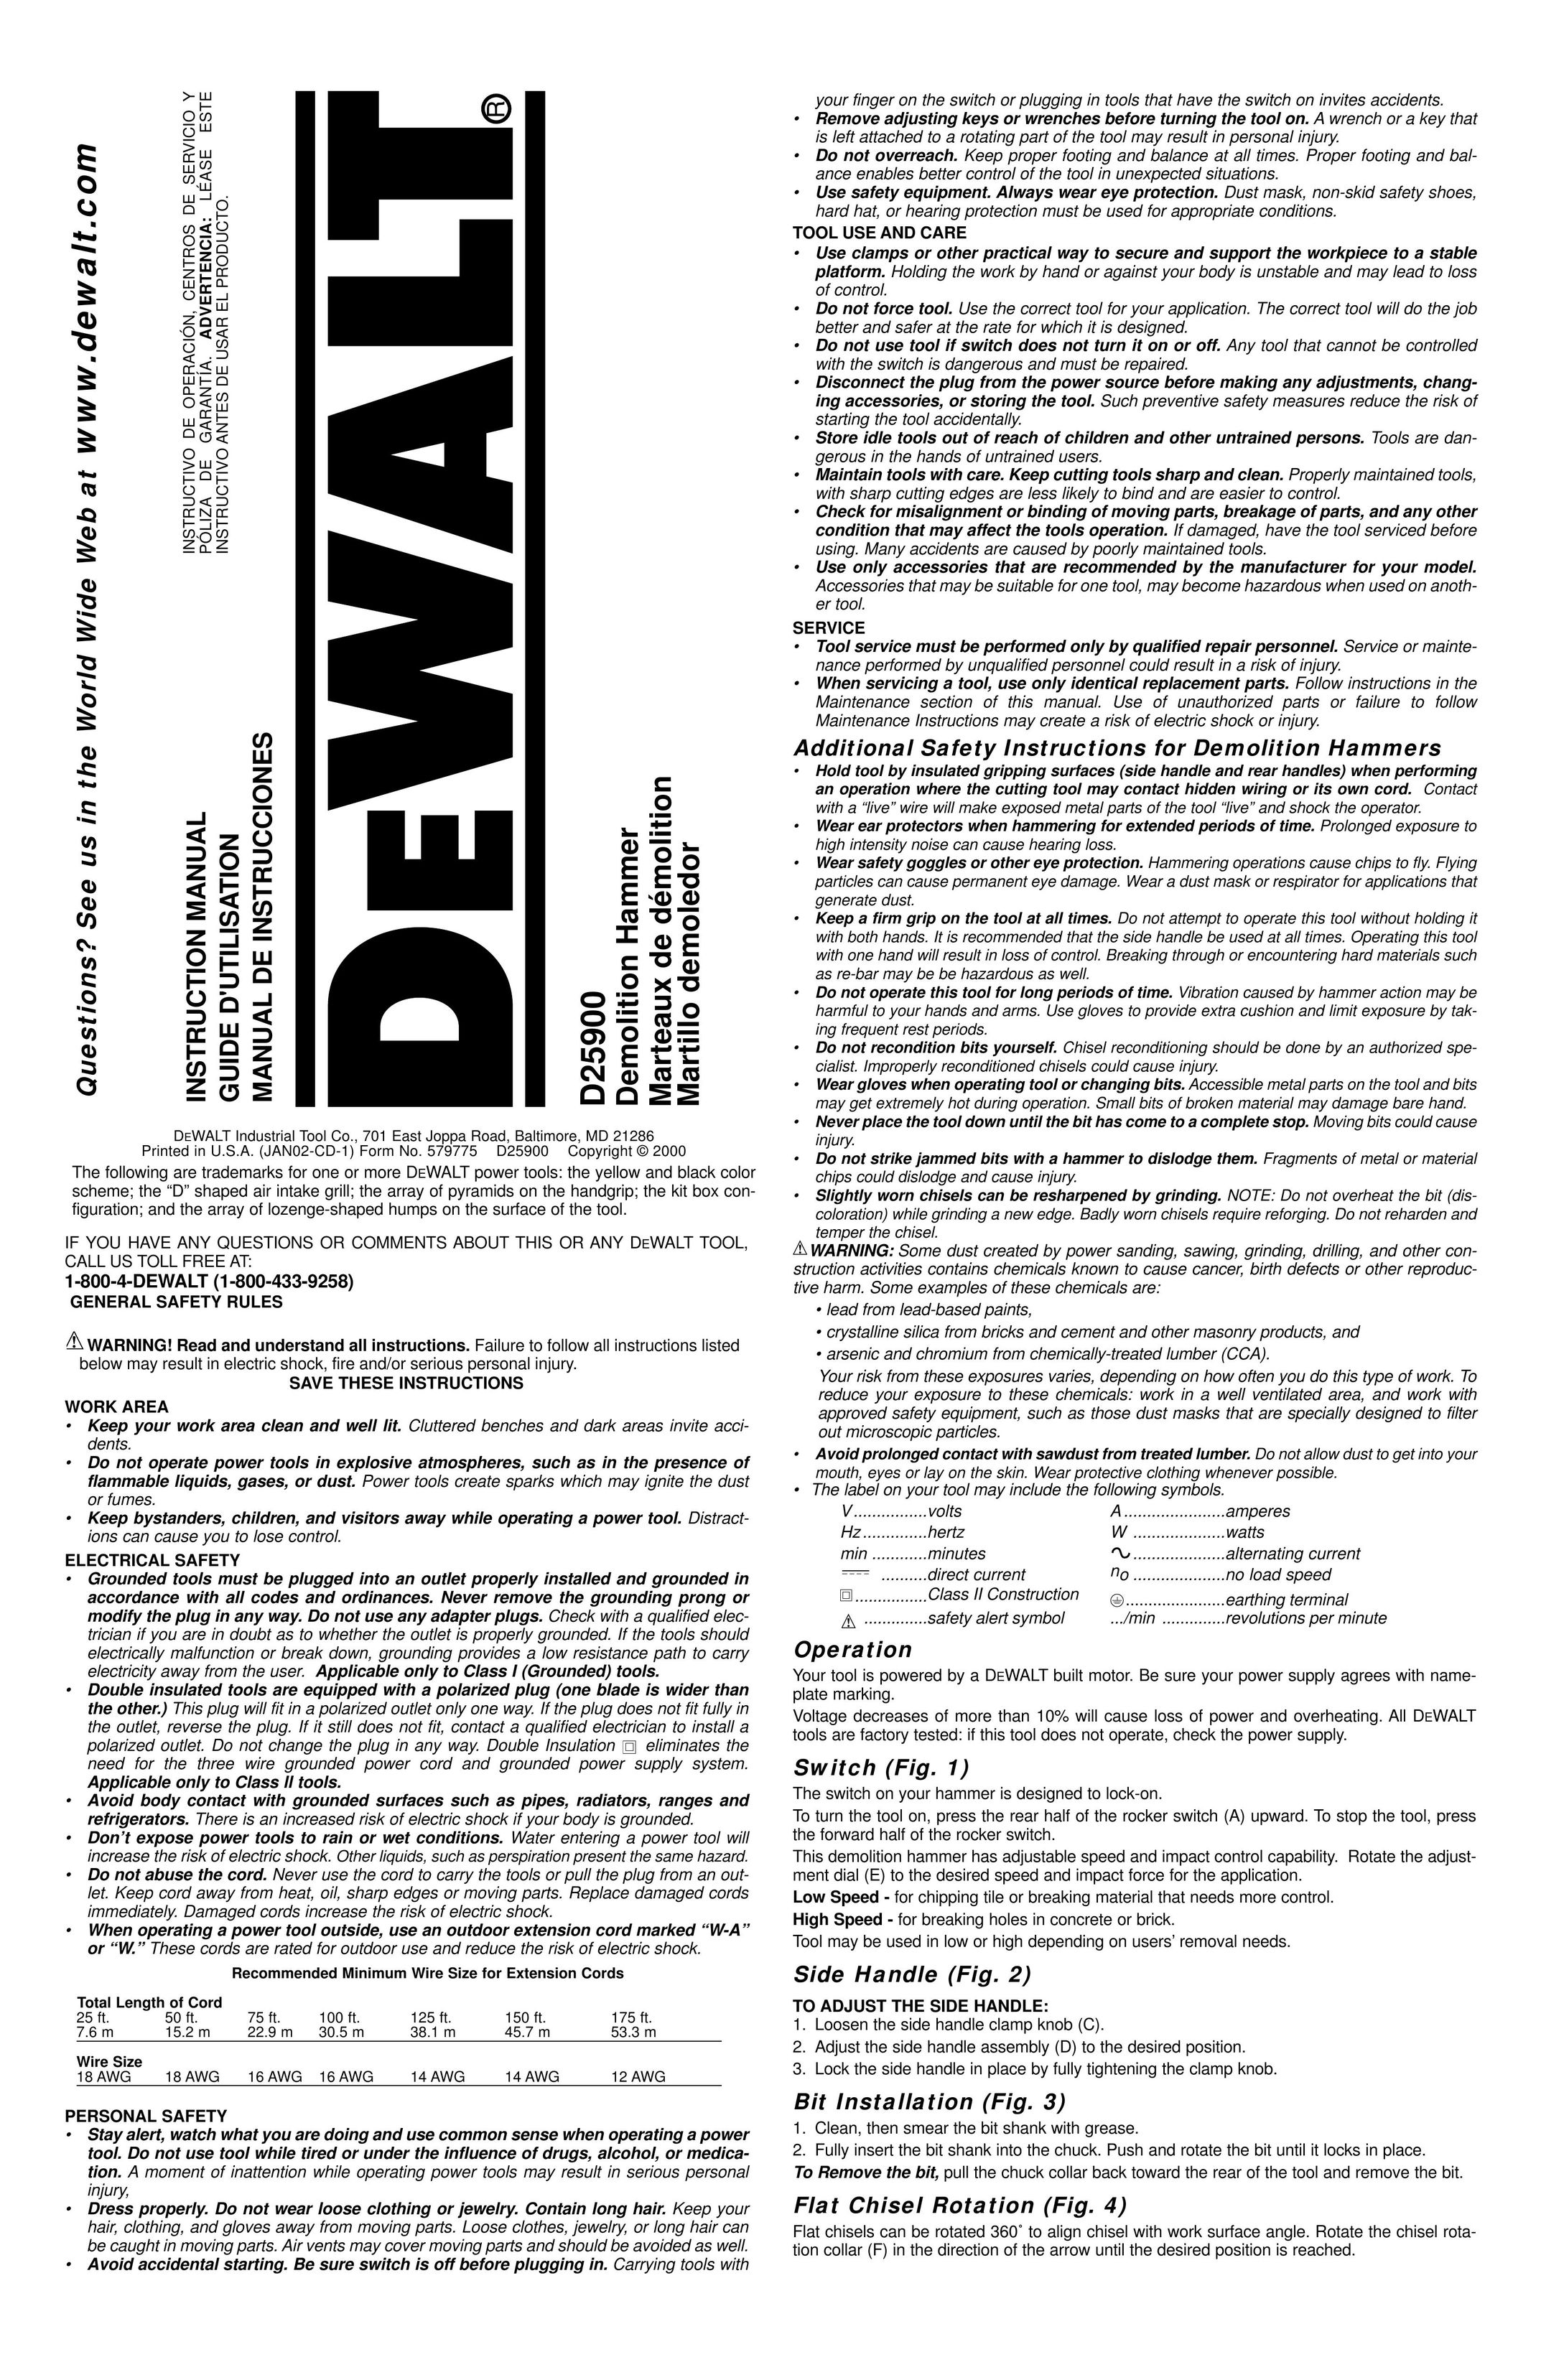 DeWalt D25900 Power Hammer User Manual